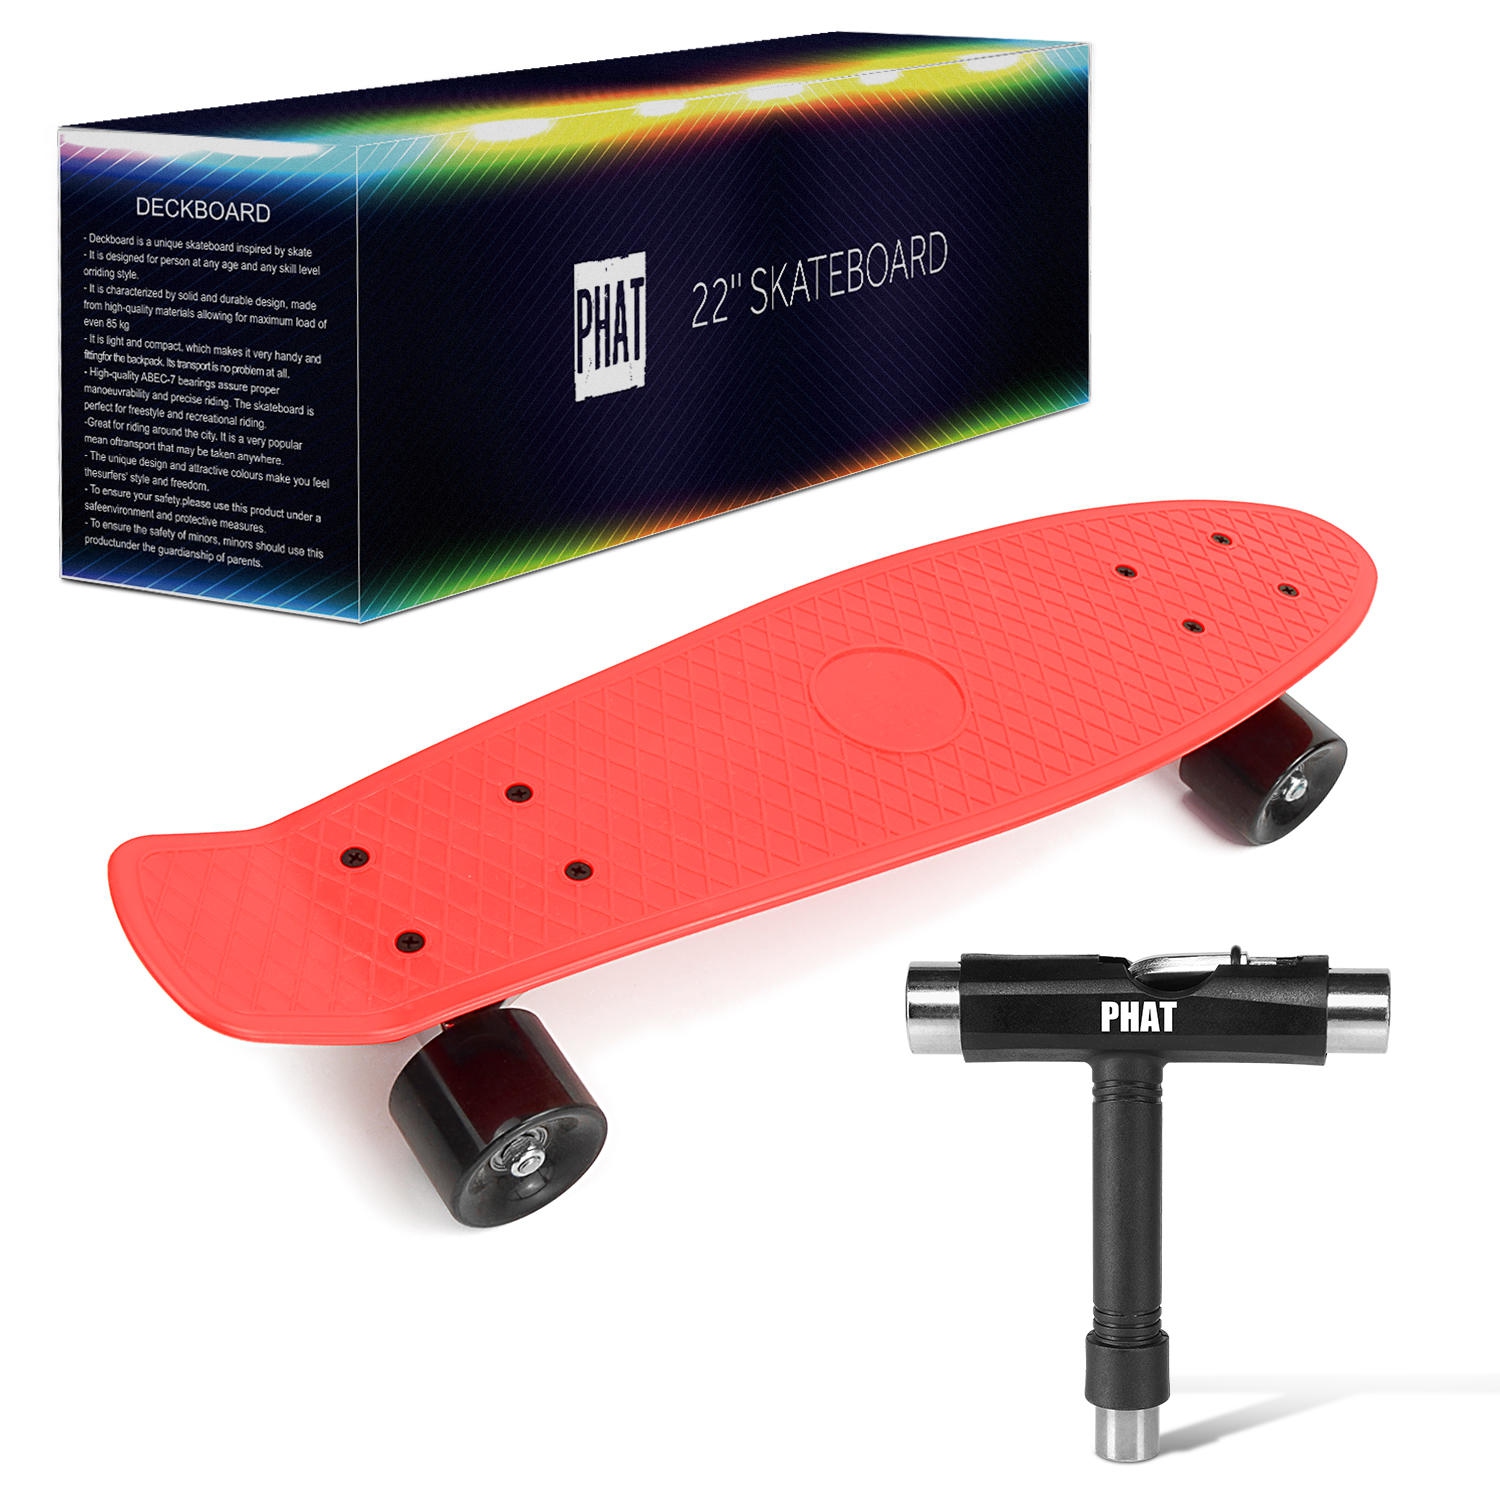 22" Plastic Retro Skateboard with All-in-One Skate T-Tool, Cruiser Street Surfing Banana Skate Board